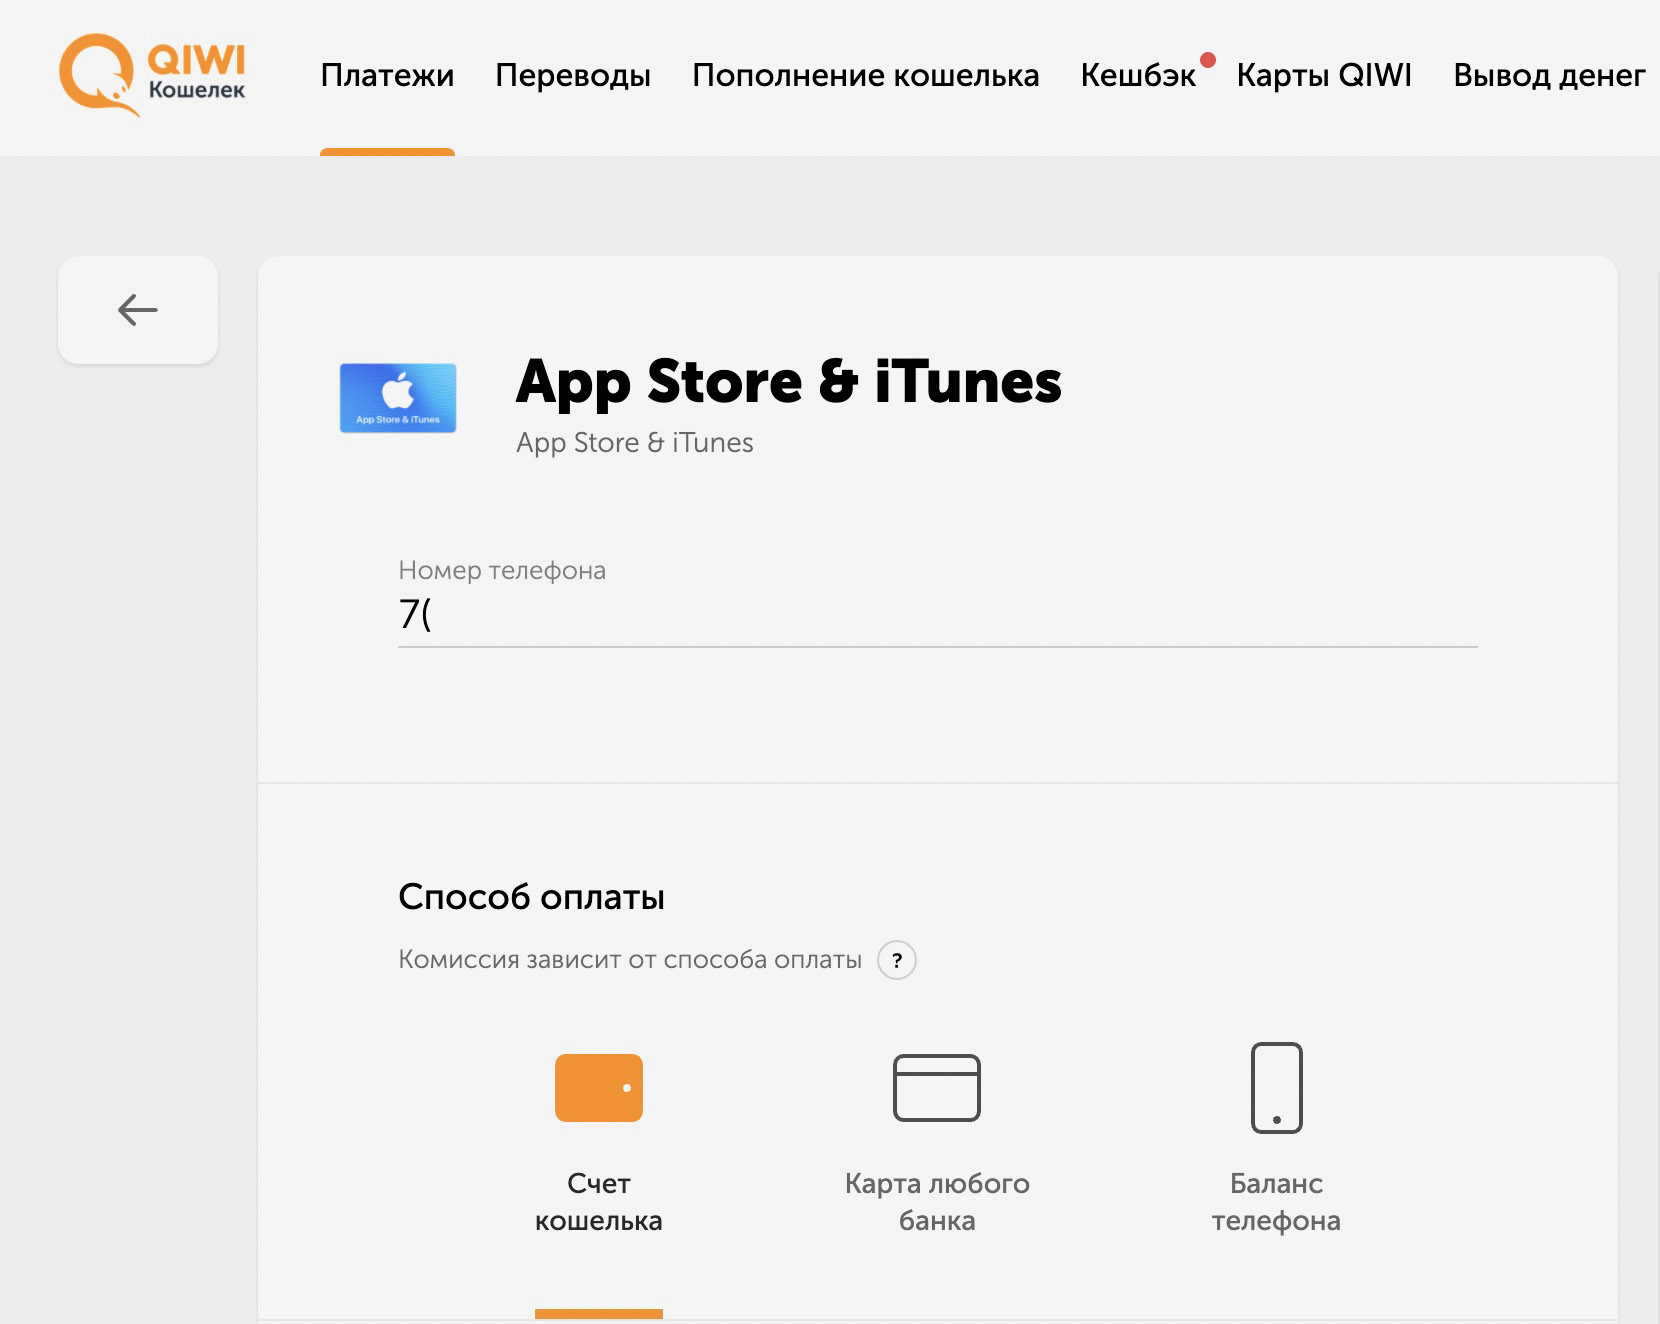 Пополнение кошелька. Баланс в app Store. Kiwi (Store). QIWI кошелек.